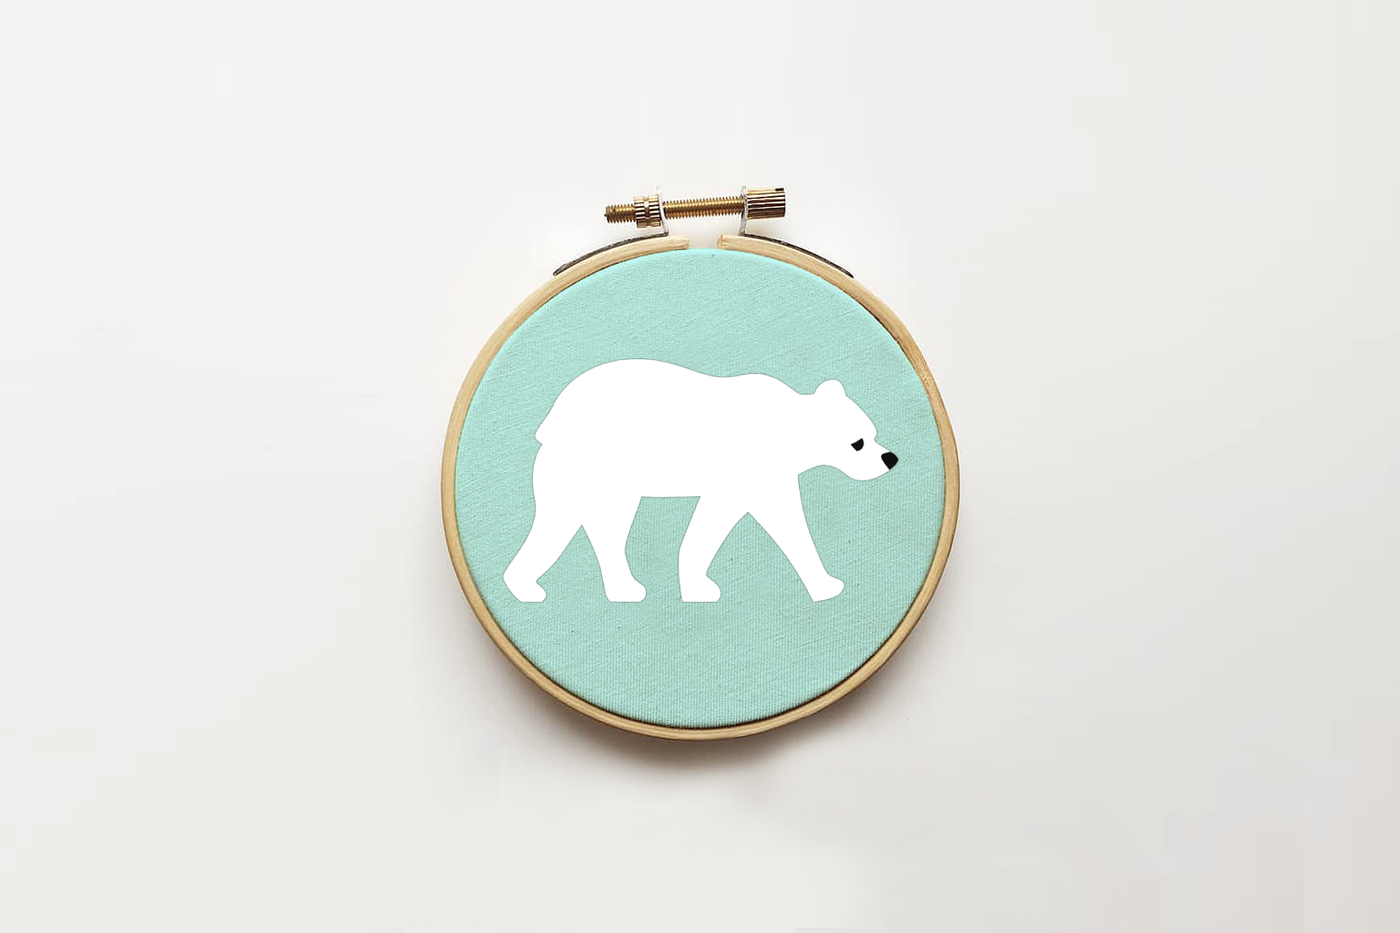 Walking bear design in polar bear colors